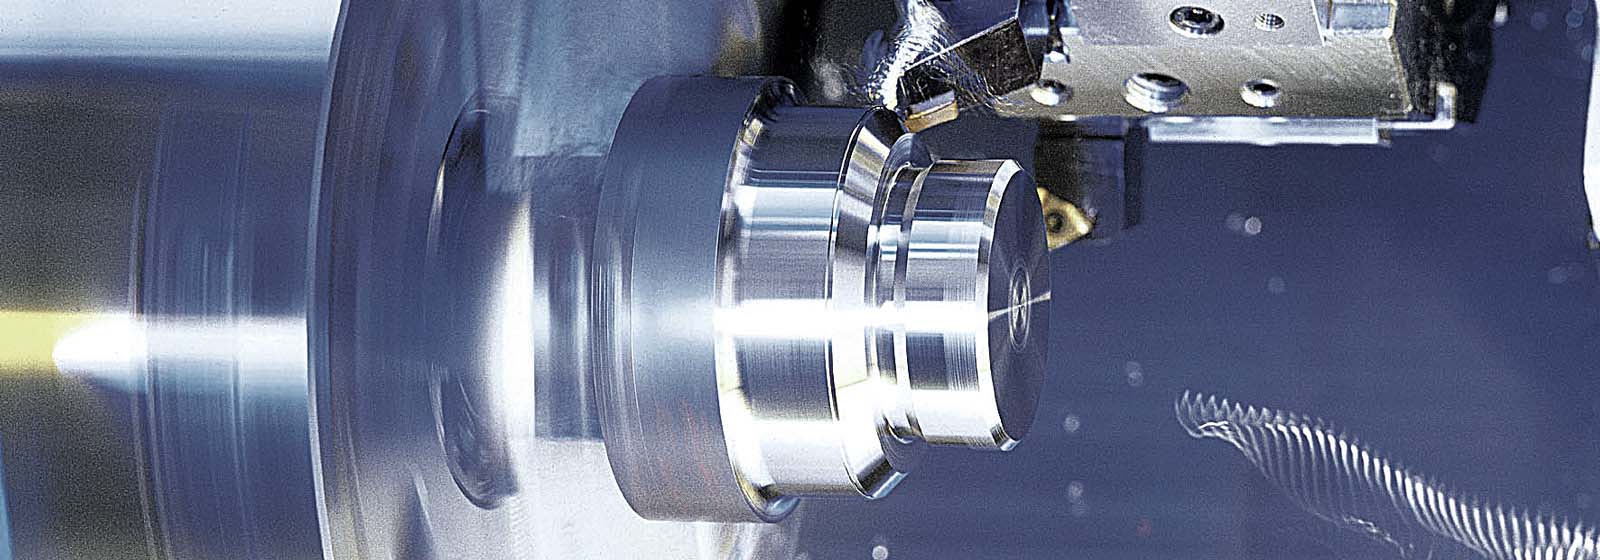 CNC machine turning metal workpiece